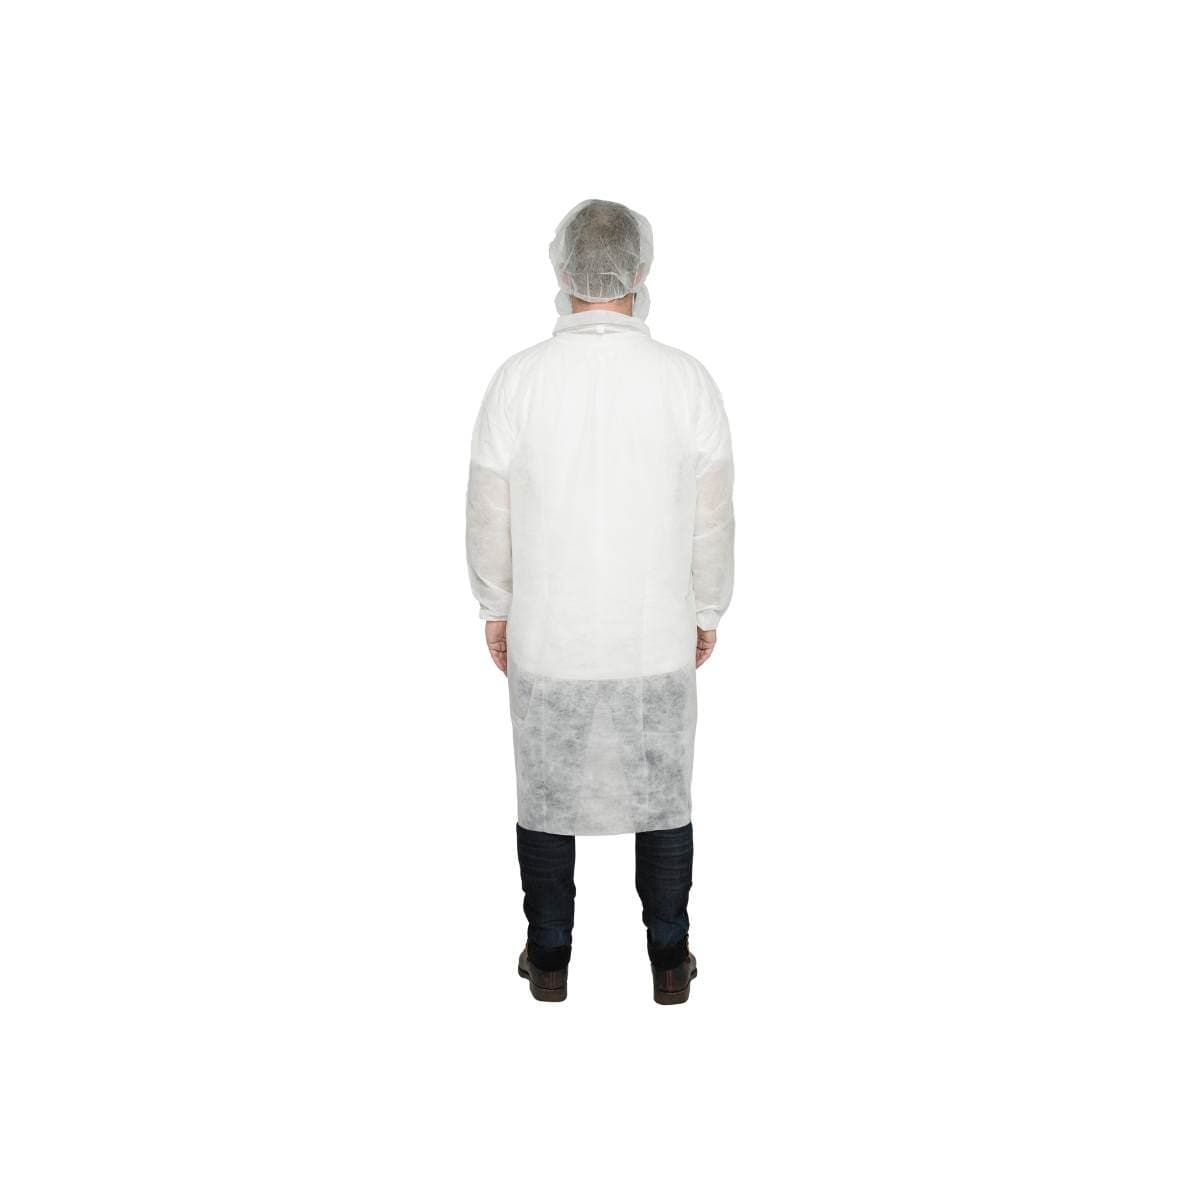 SafeRite® Disposable Lab Coat SRDLC (Carton of 50)